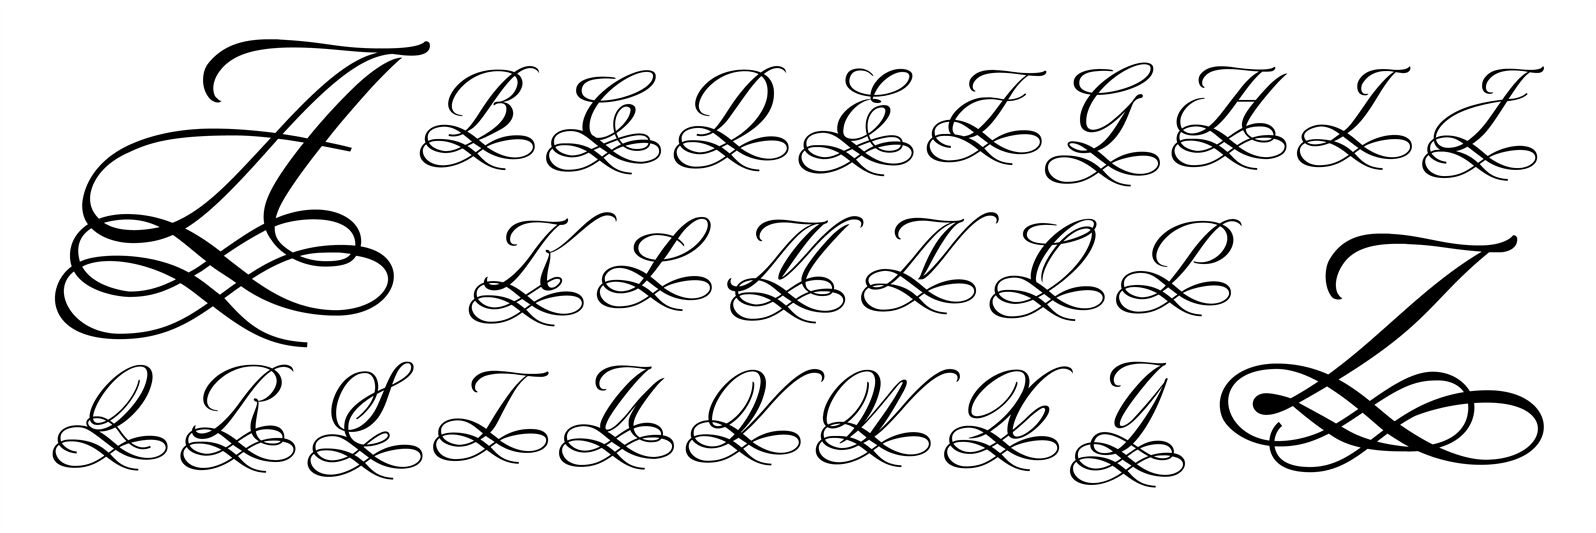 filigree letters alphabet